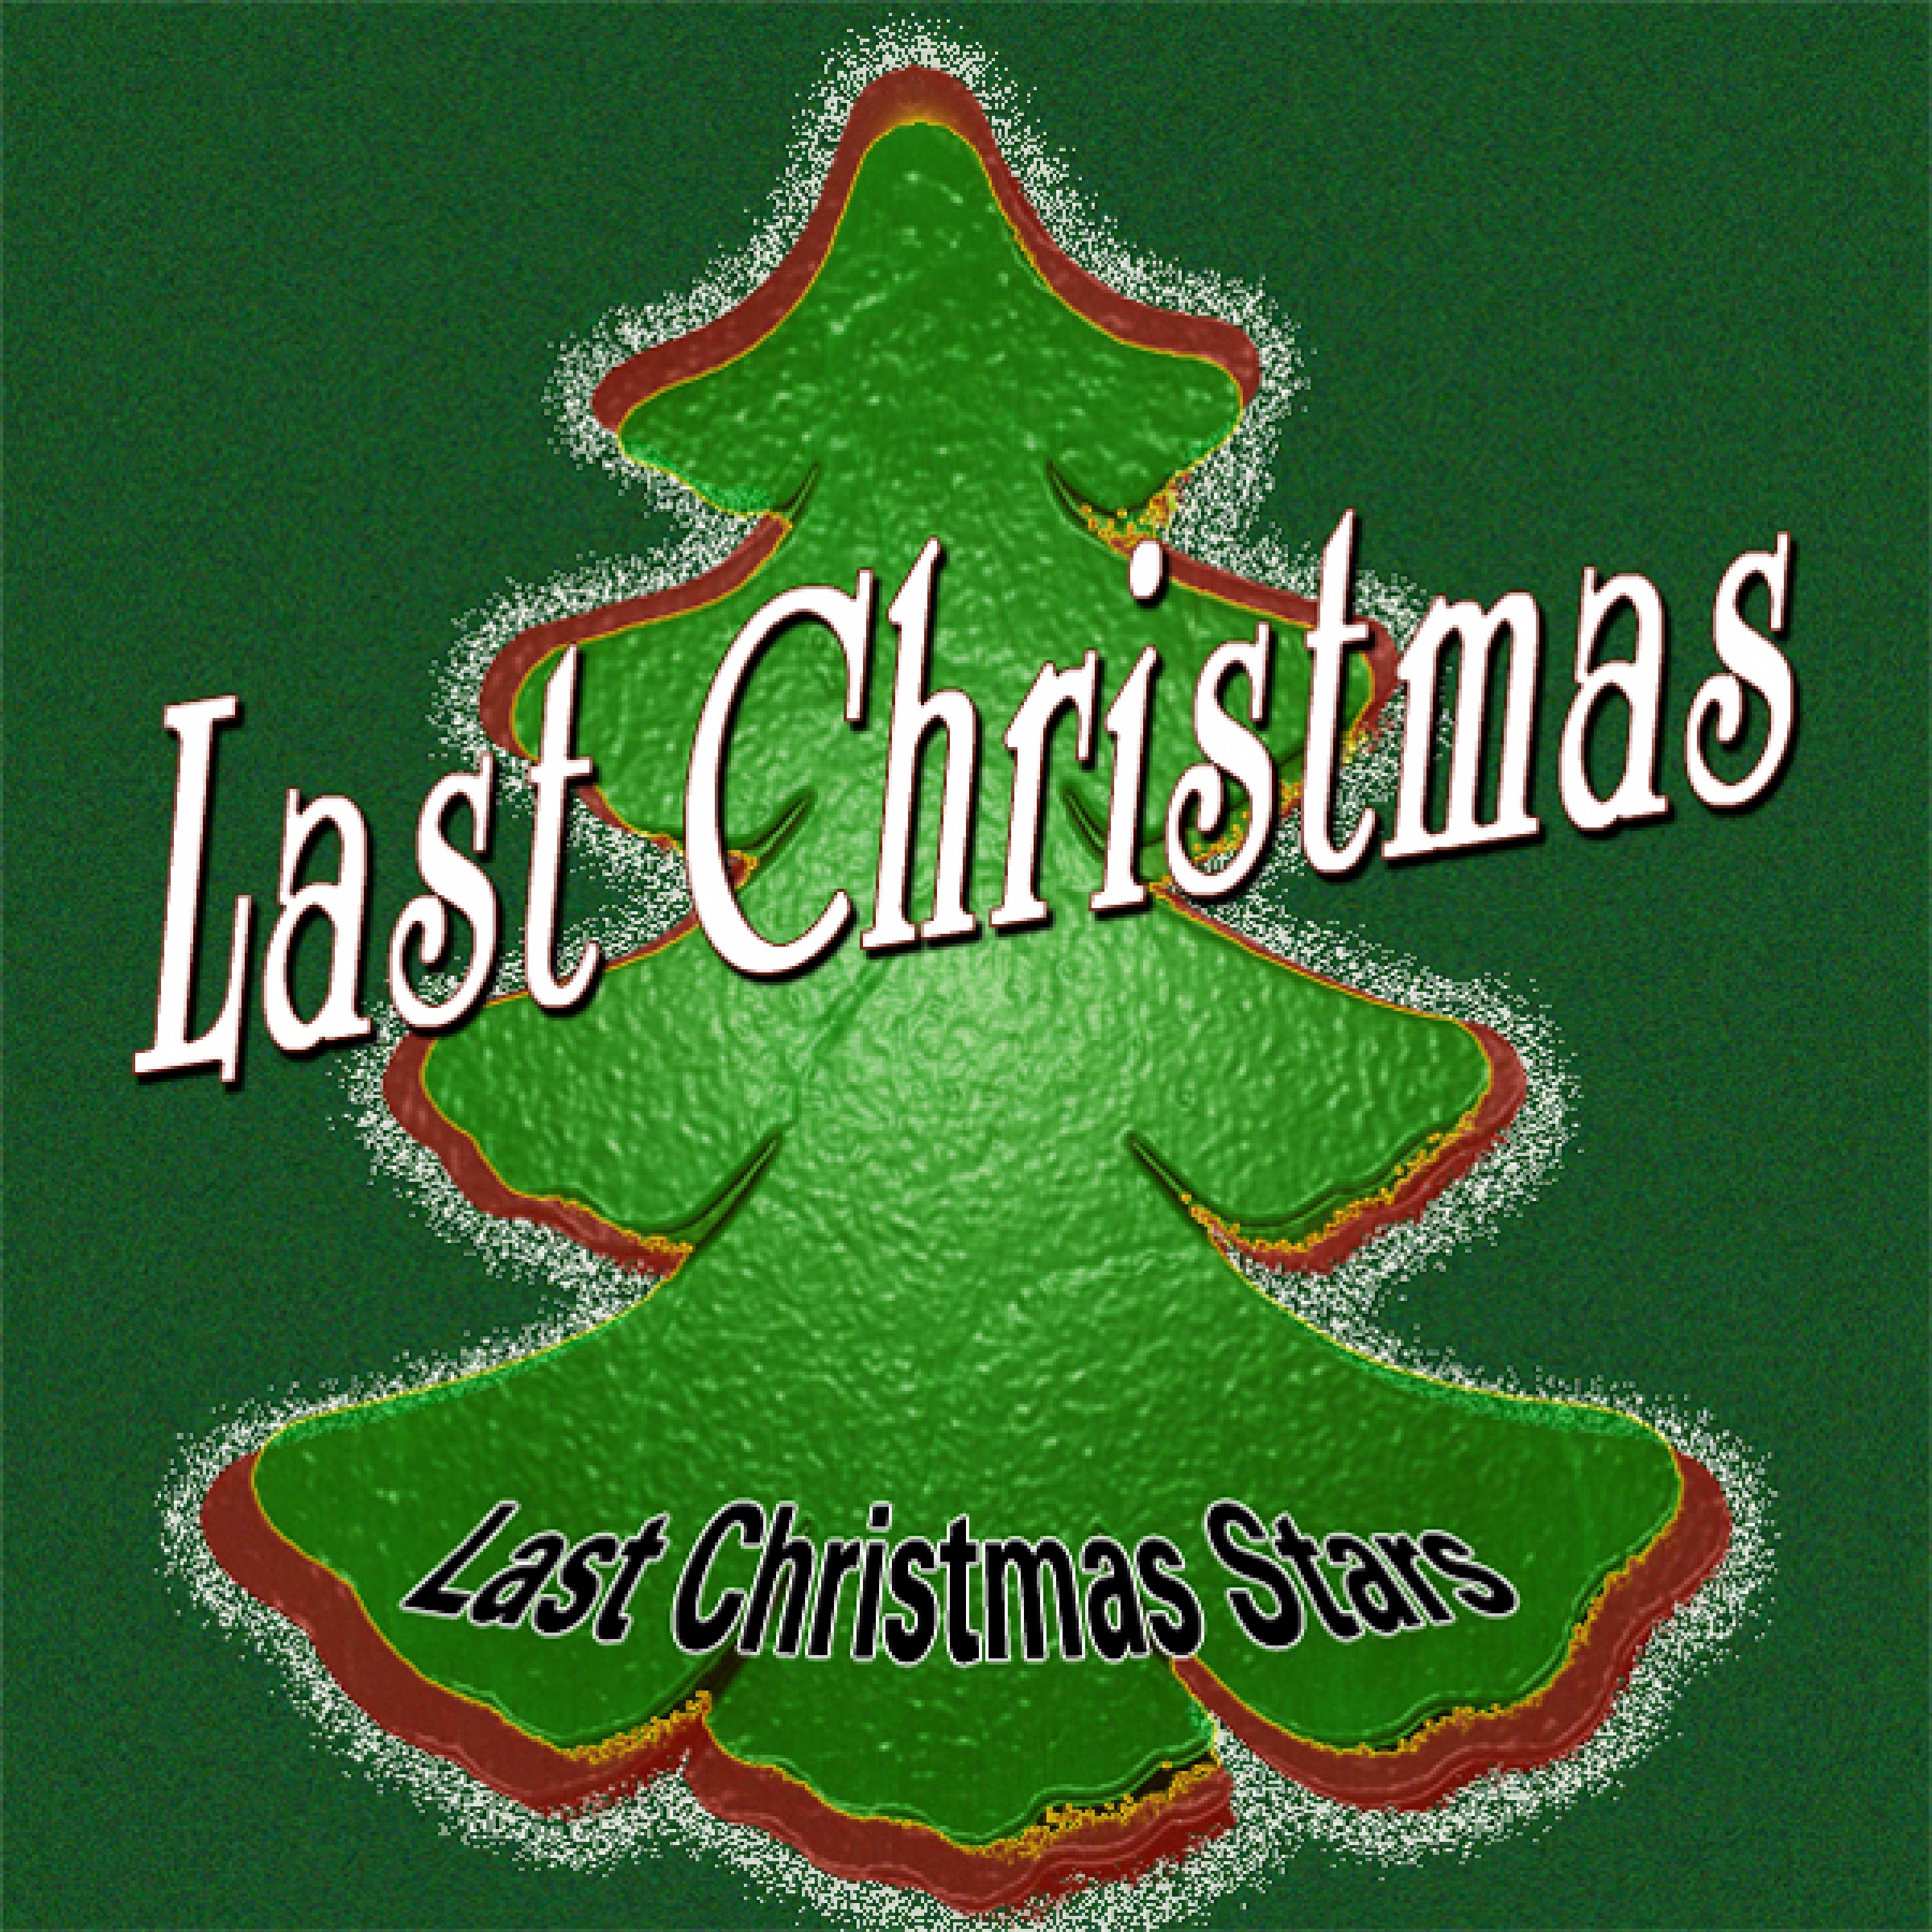 Май кристмас ласт кристмас. Last Christmas. Last Christmas картинки. Last Christmas обложка. Last Christmas надпись.